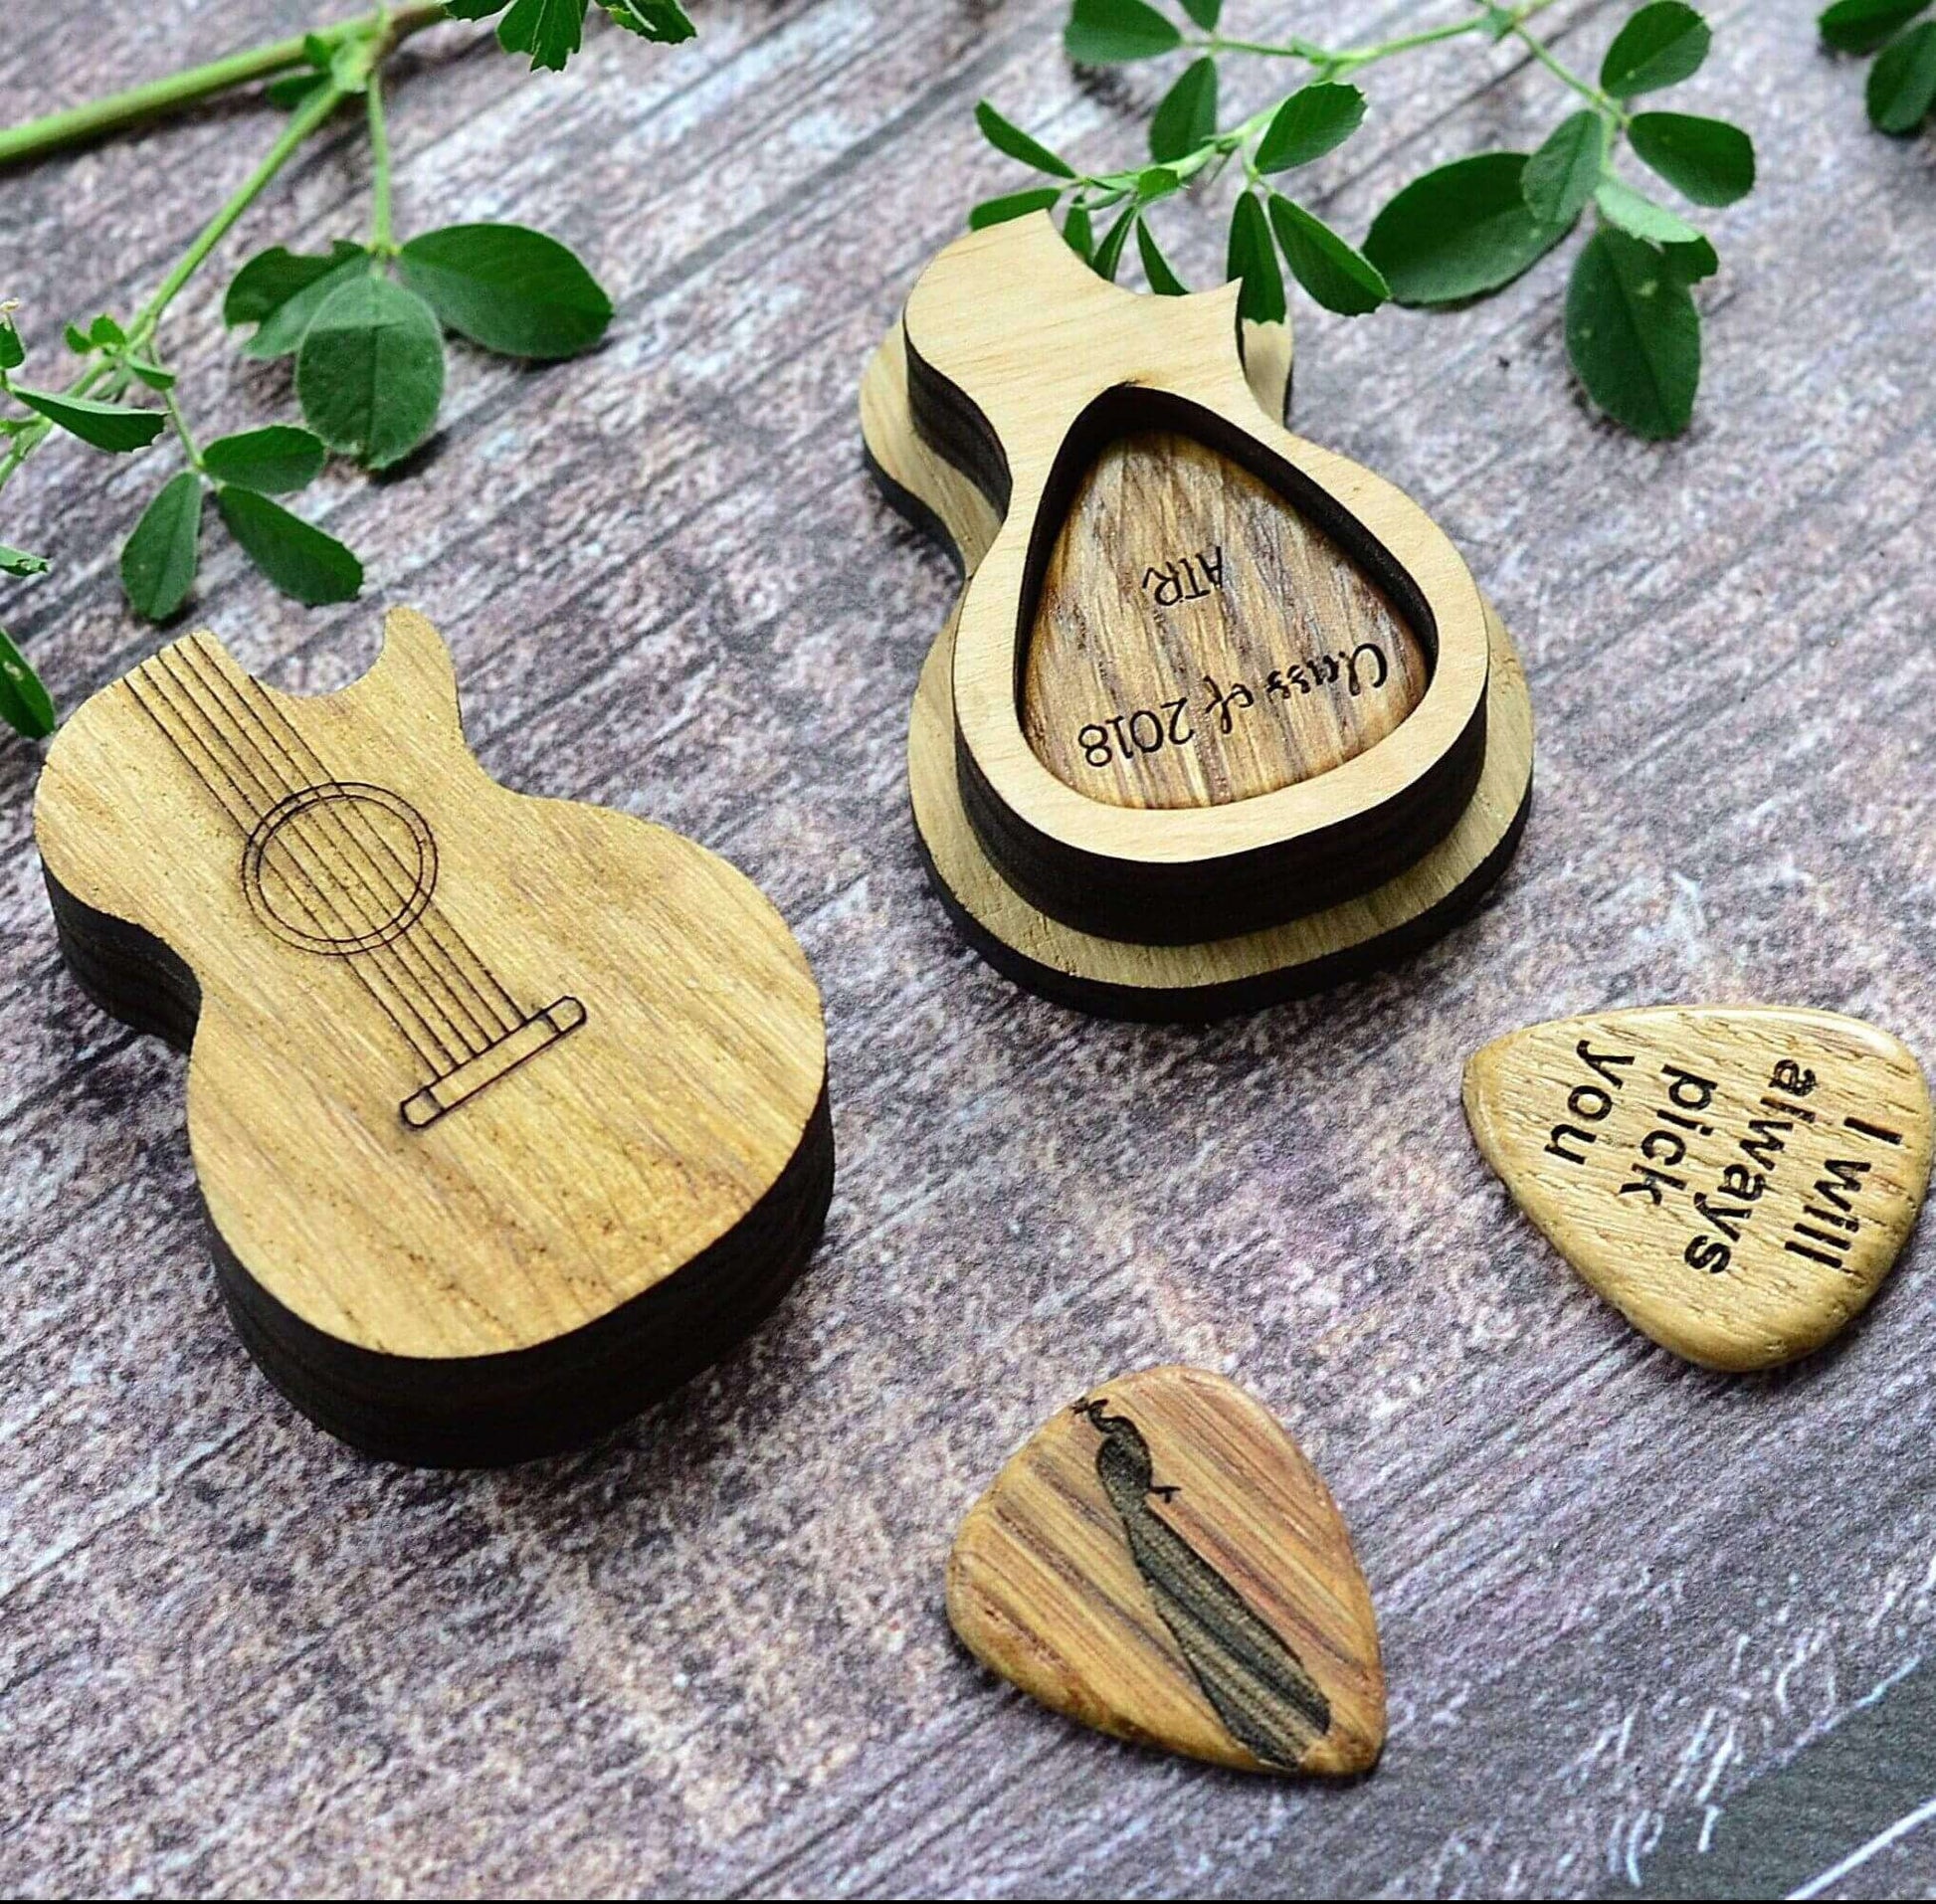 Guitzart™ Guitar pick box with wooden picks guitarmetrics